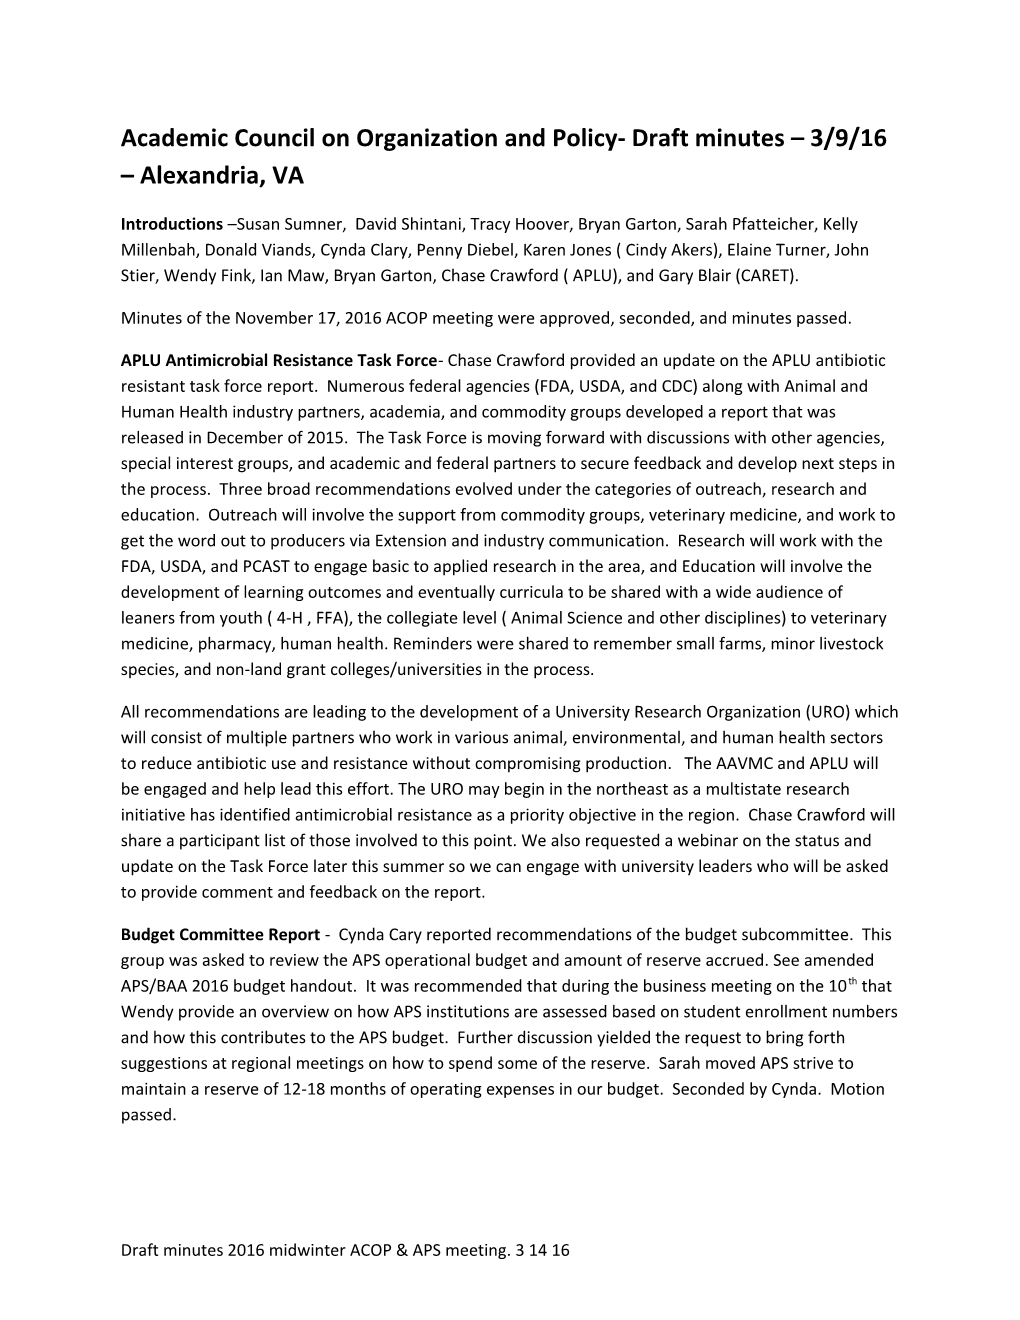 Academic Council on Organization and Policy- Draft Minutes 3/9/16 Alexandria, VA